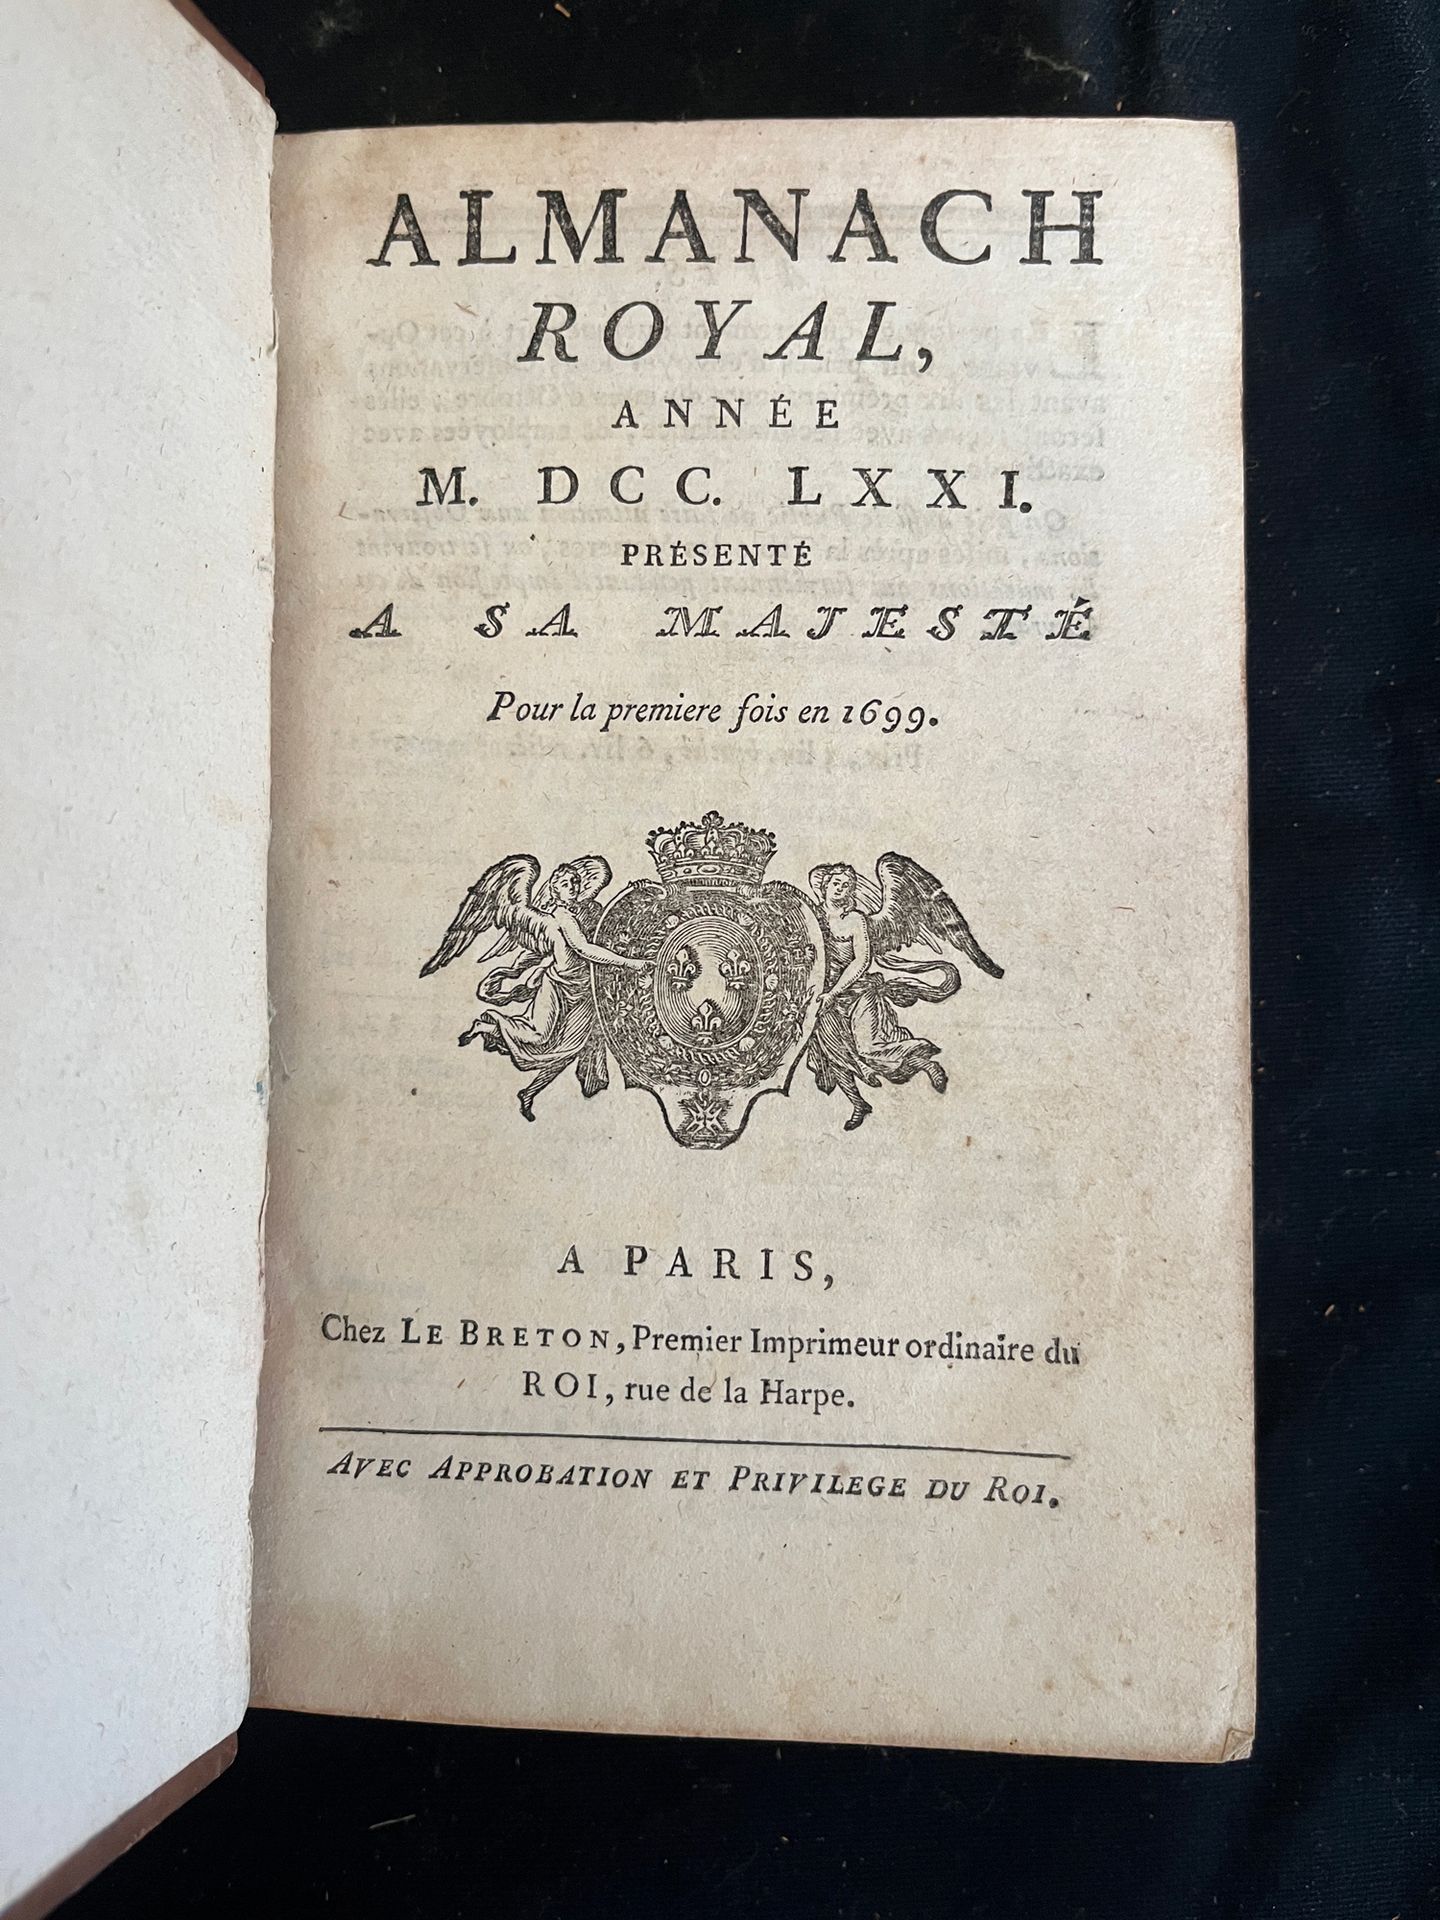 Null [ALMANACH]
Royal almanac for the year MDCCLXXI. Paris, chez Le breton rue d&hellip;